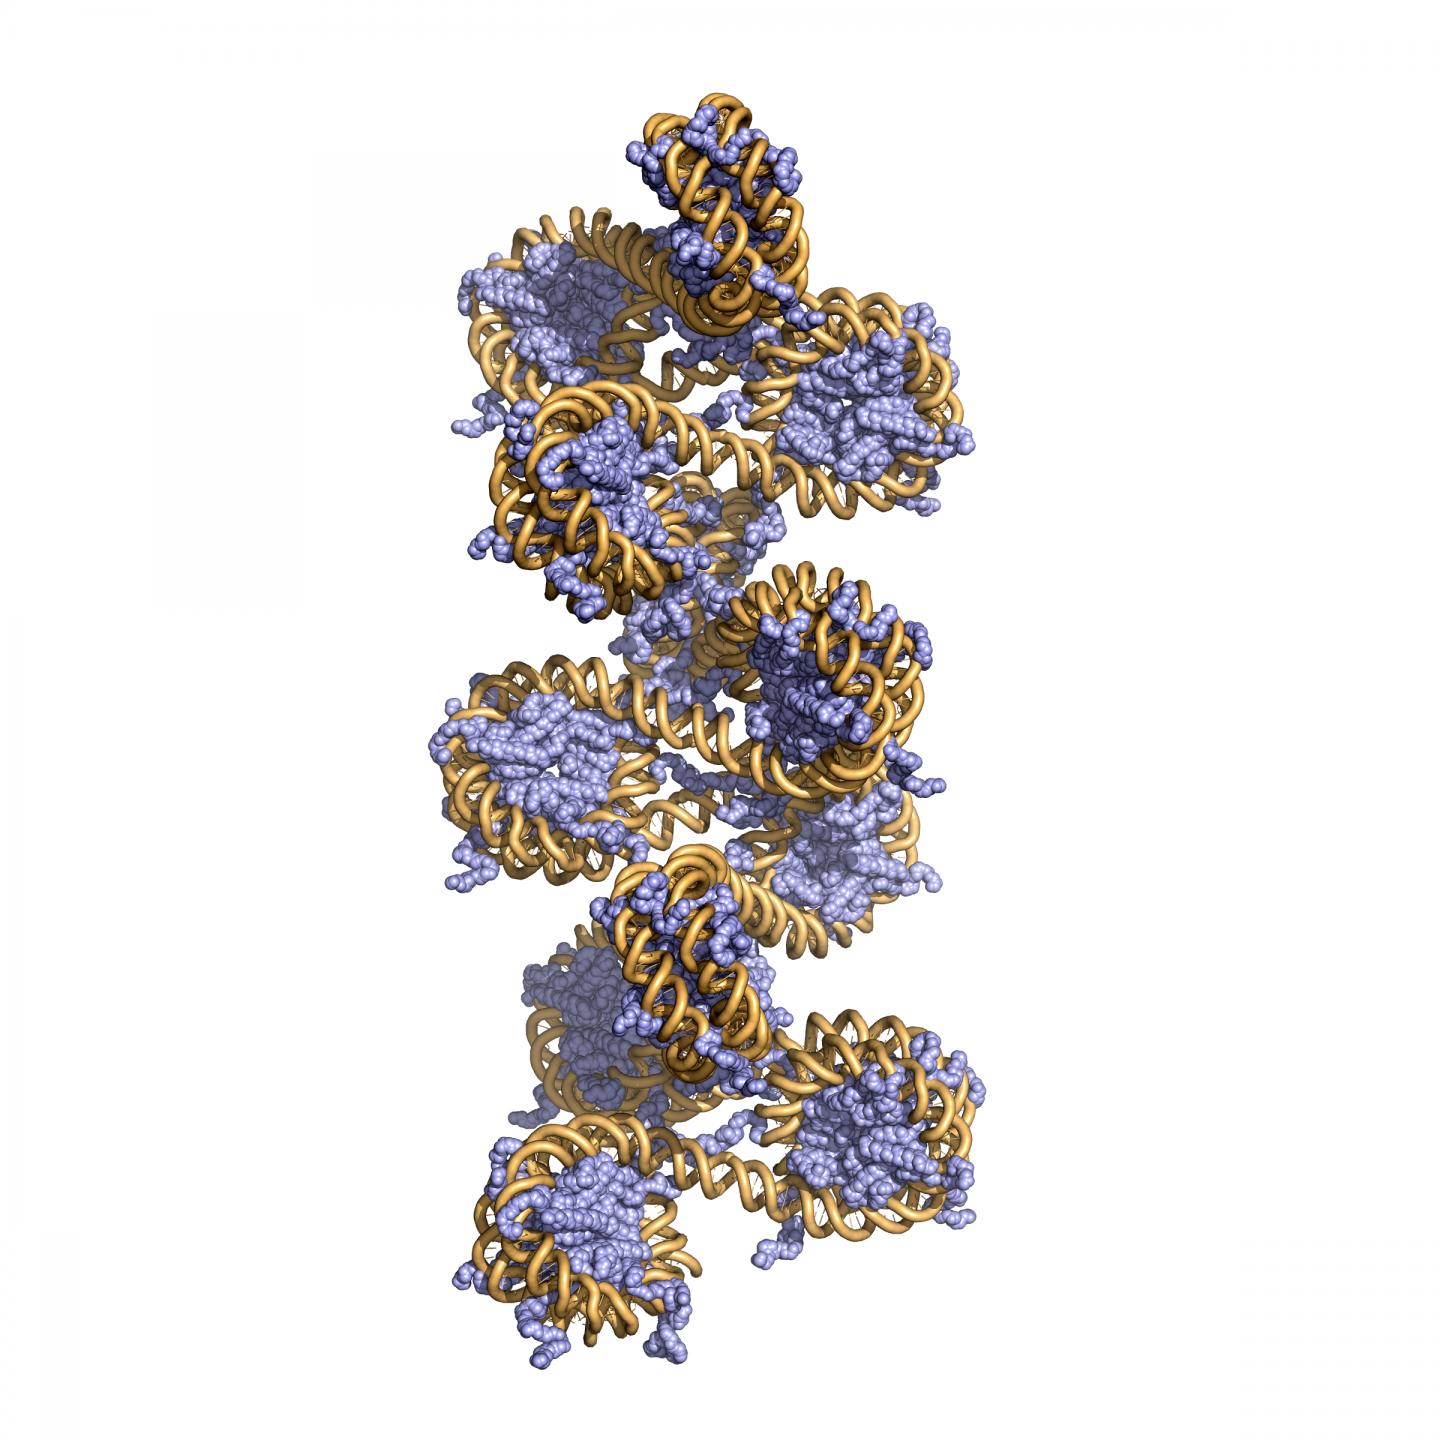 Chromatin DNA